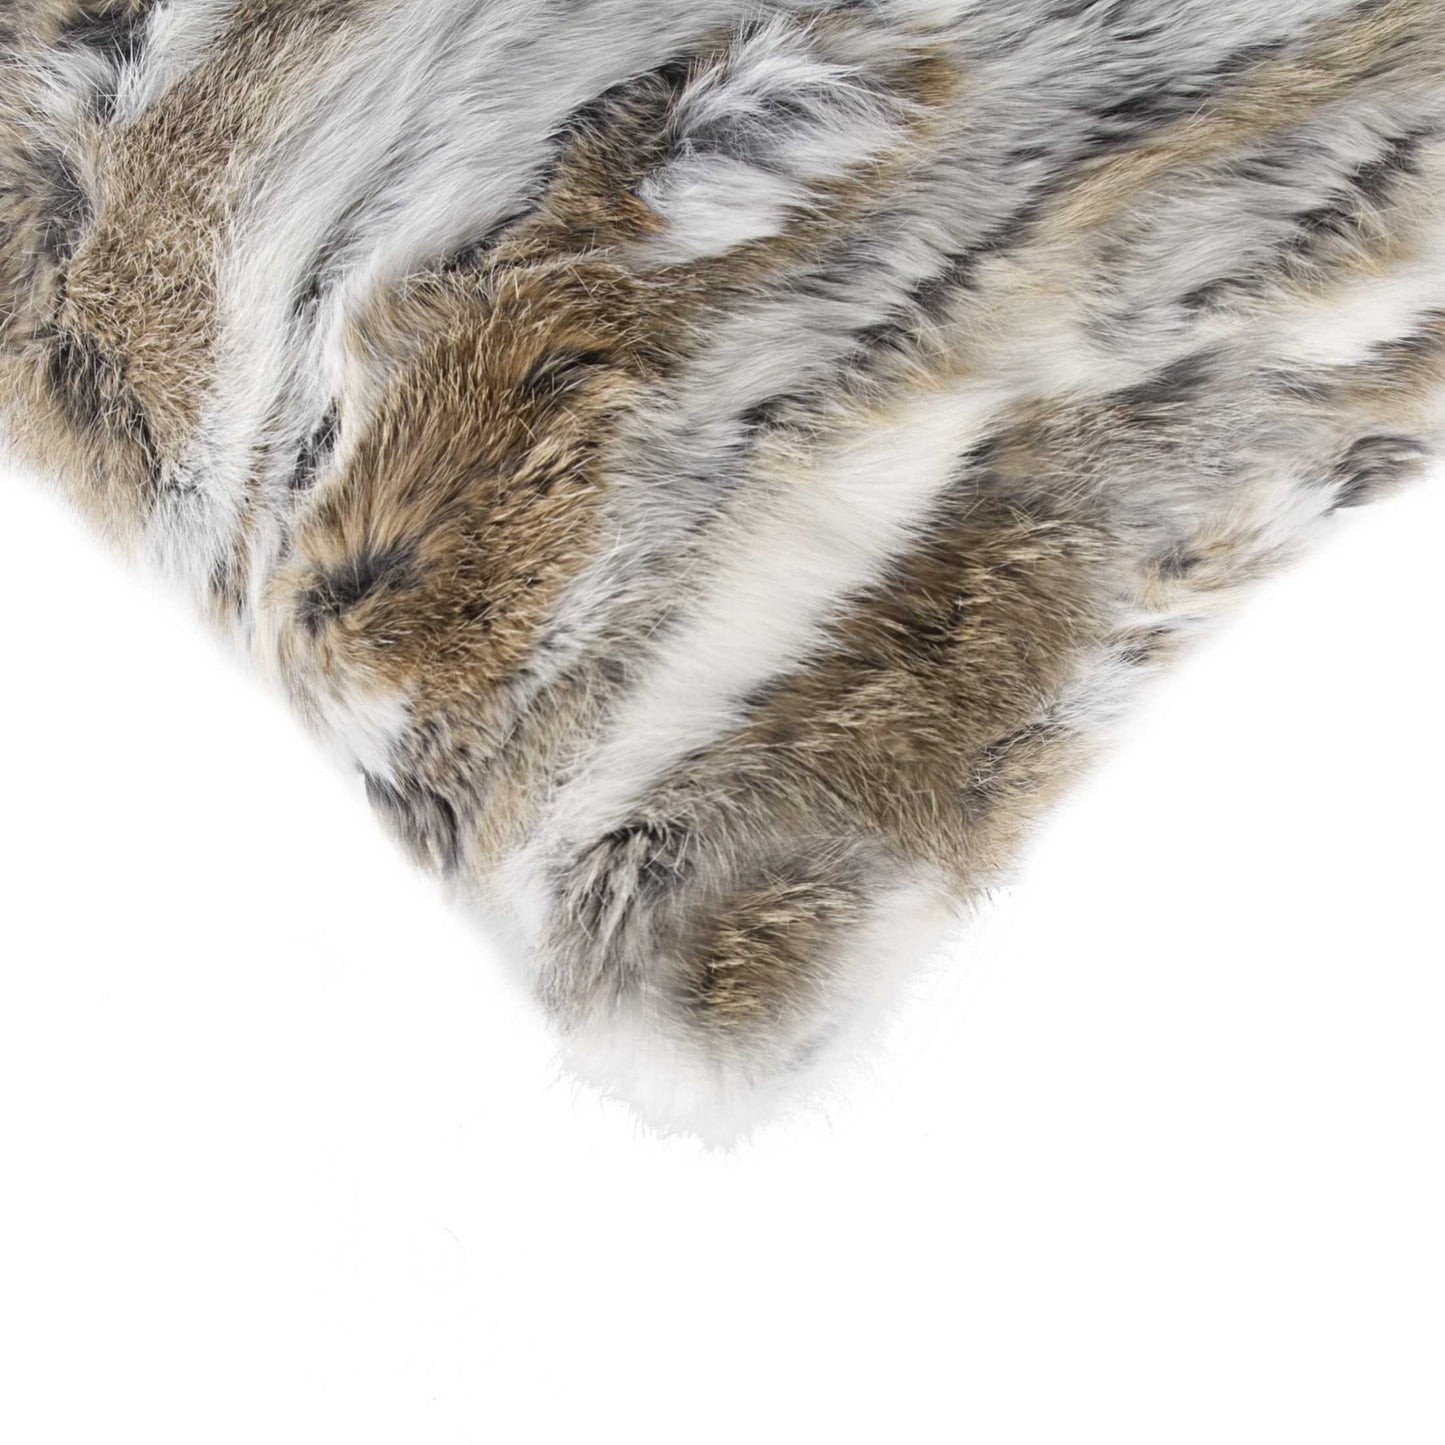 5" X 18" X 18" 100% Natural Rabbit Fur Tan And White Pillow